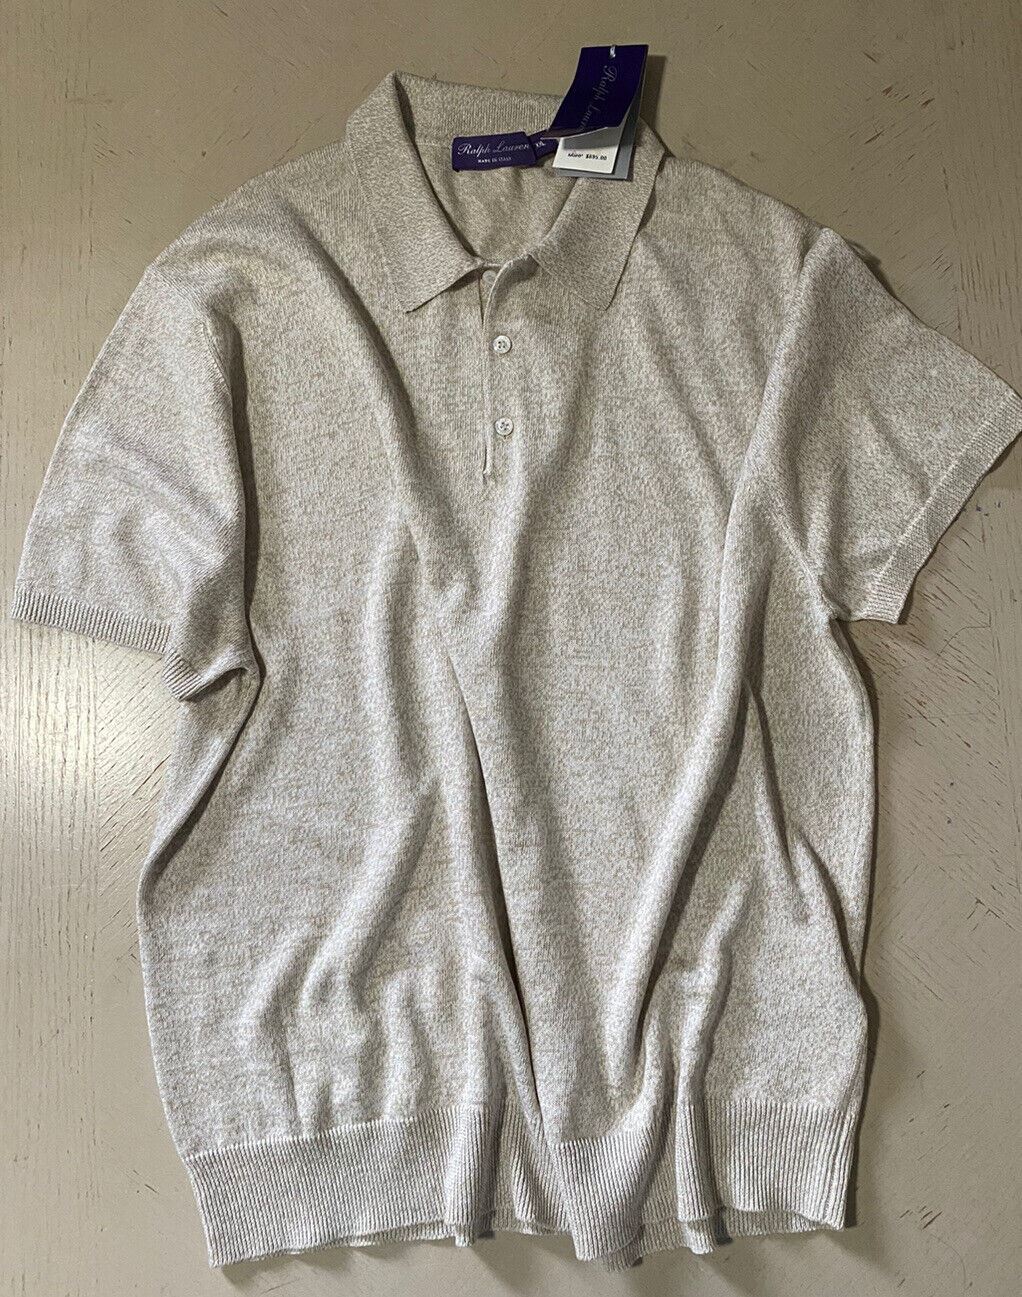 NWT $695 Ralph Lauren Purple Label Мужская рубашка поло цвета камня XXL Италия